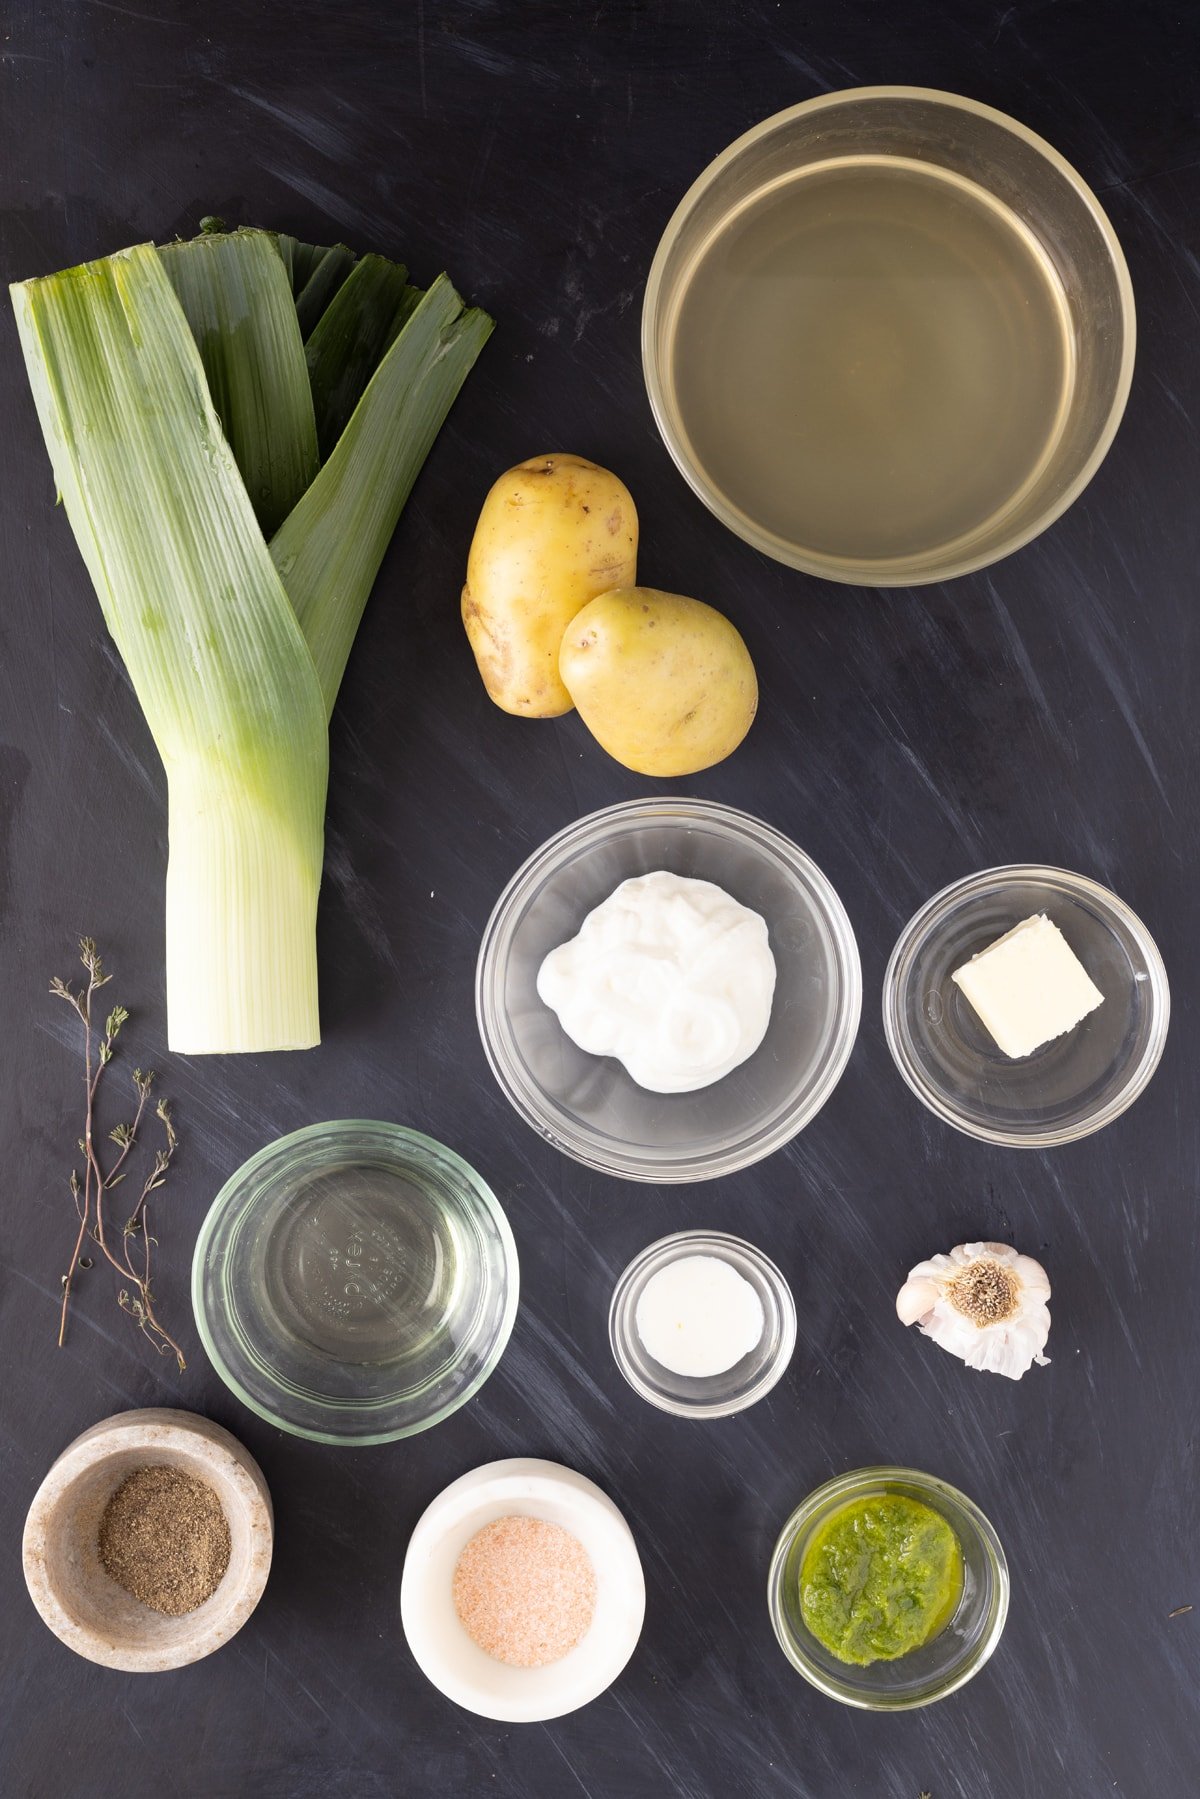 Overhead view of ingredients needed for potato leek soup